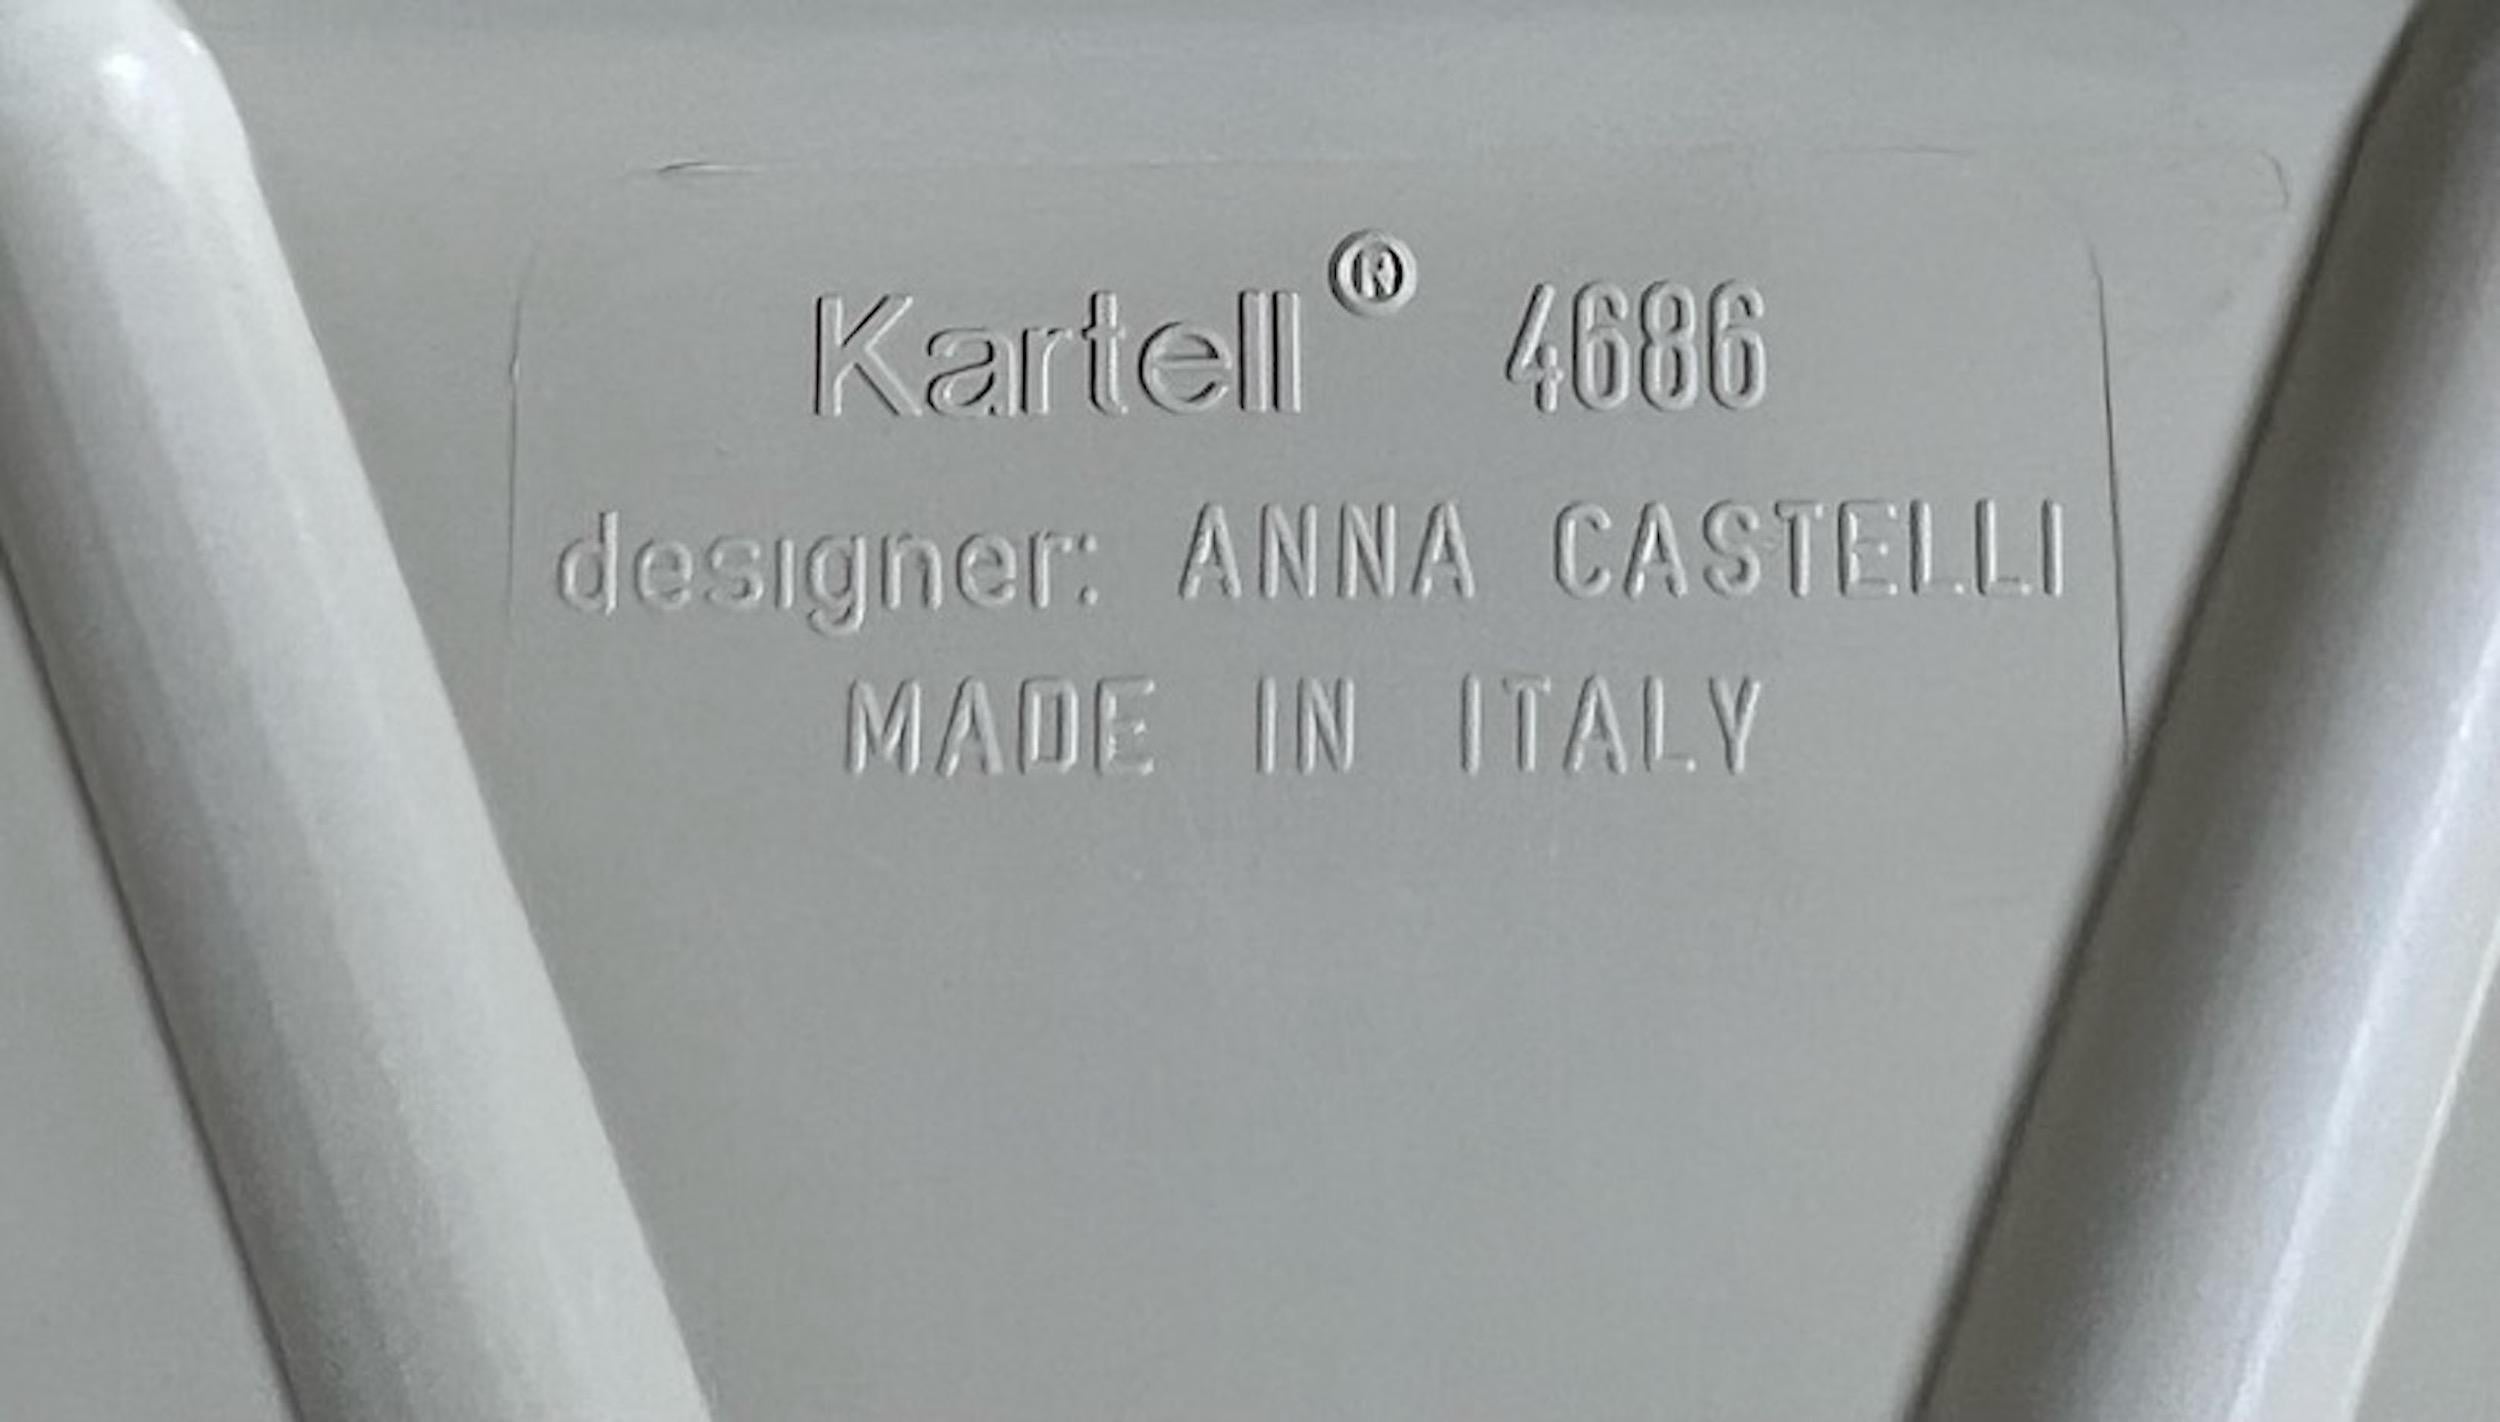 Kartell Planter Model 4686 by Anna Castelli Ferrieri, 1960s 3